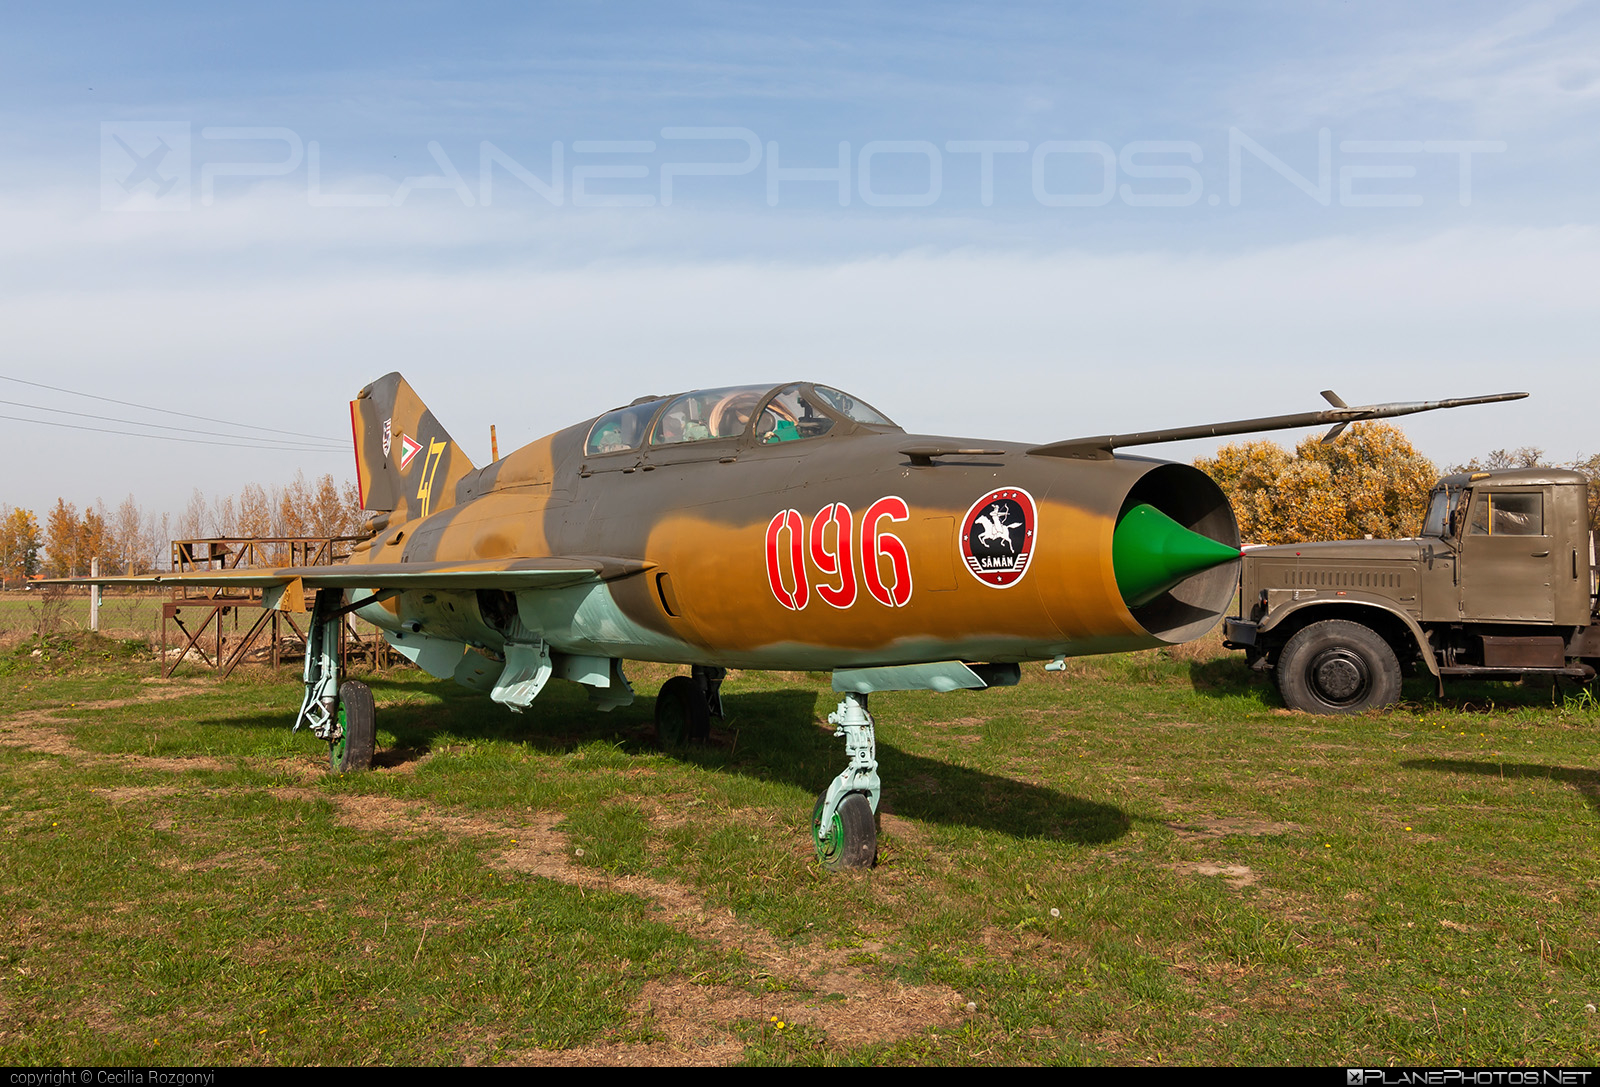 Mikoyan-Gurevich MiG-21UM - 096 operated by Magyar Légierő (Hungarian Air Force) #hungarianairforce #magyarlegiero #mig #mig21 #mig21um #mikoyangurevich